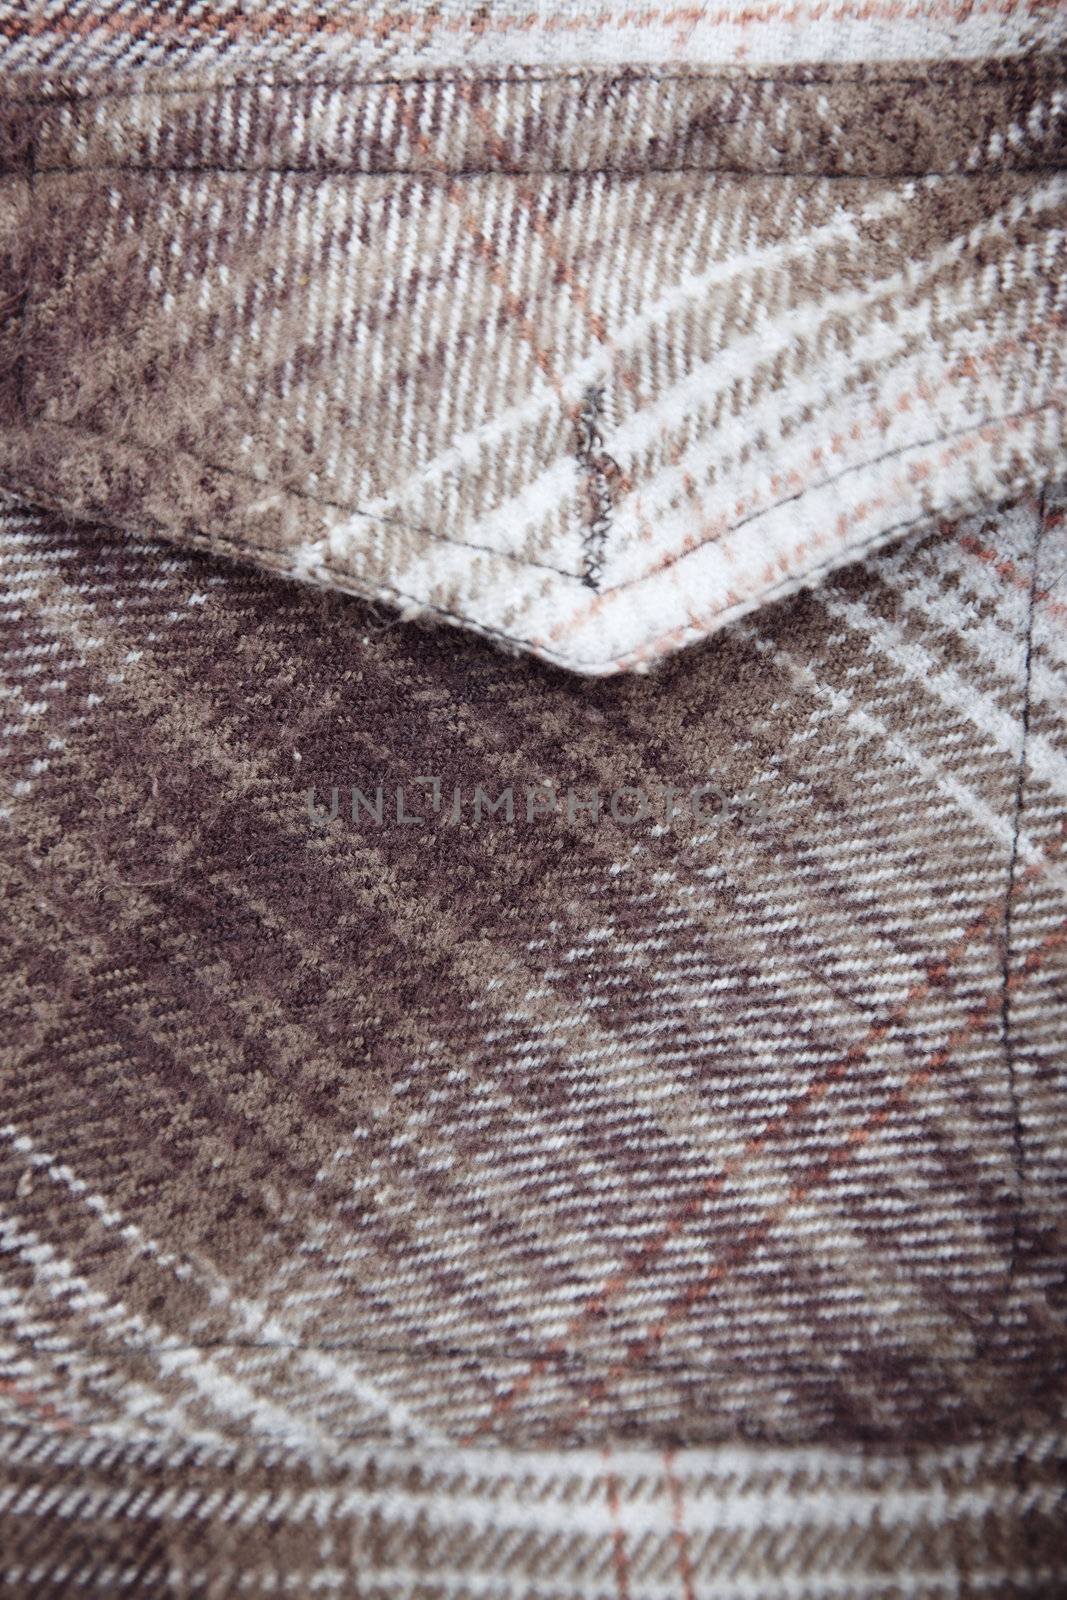 Pocket of woolen shirt. Close-up color photo